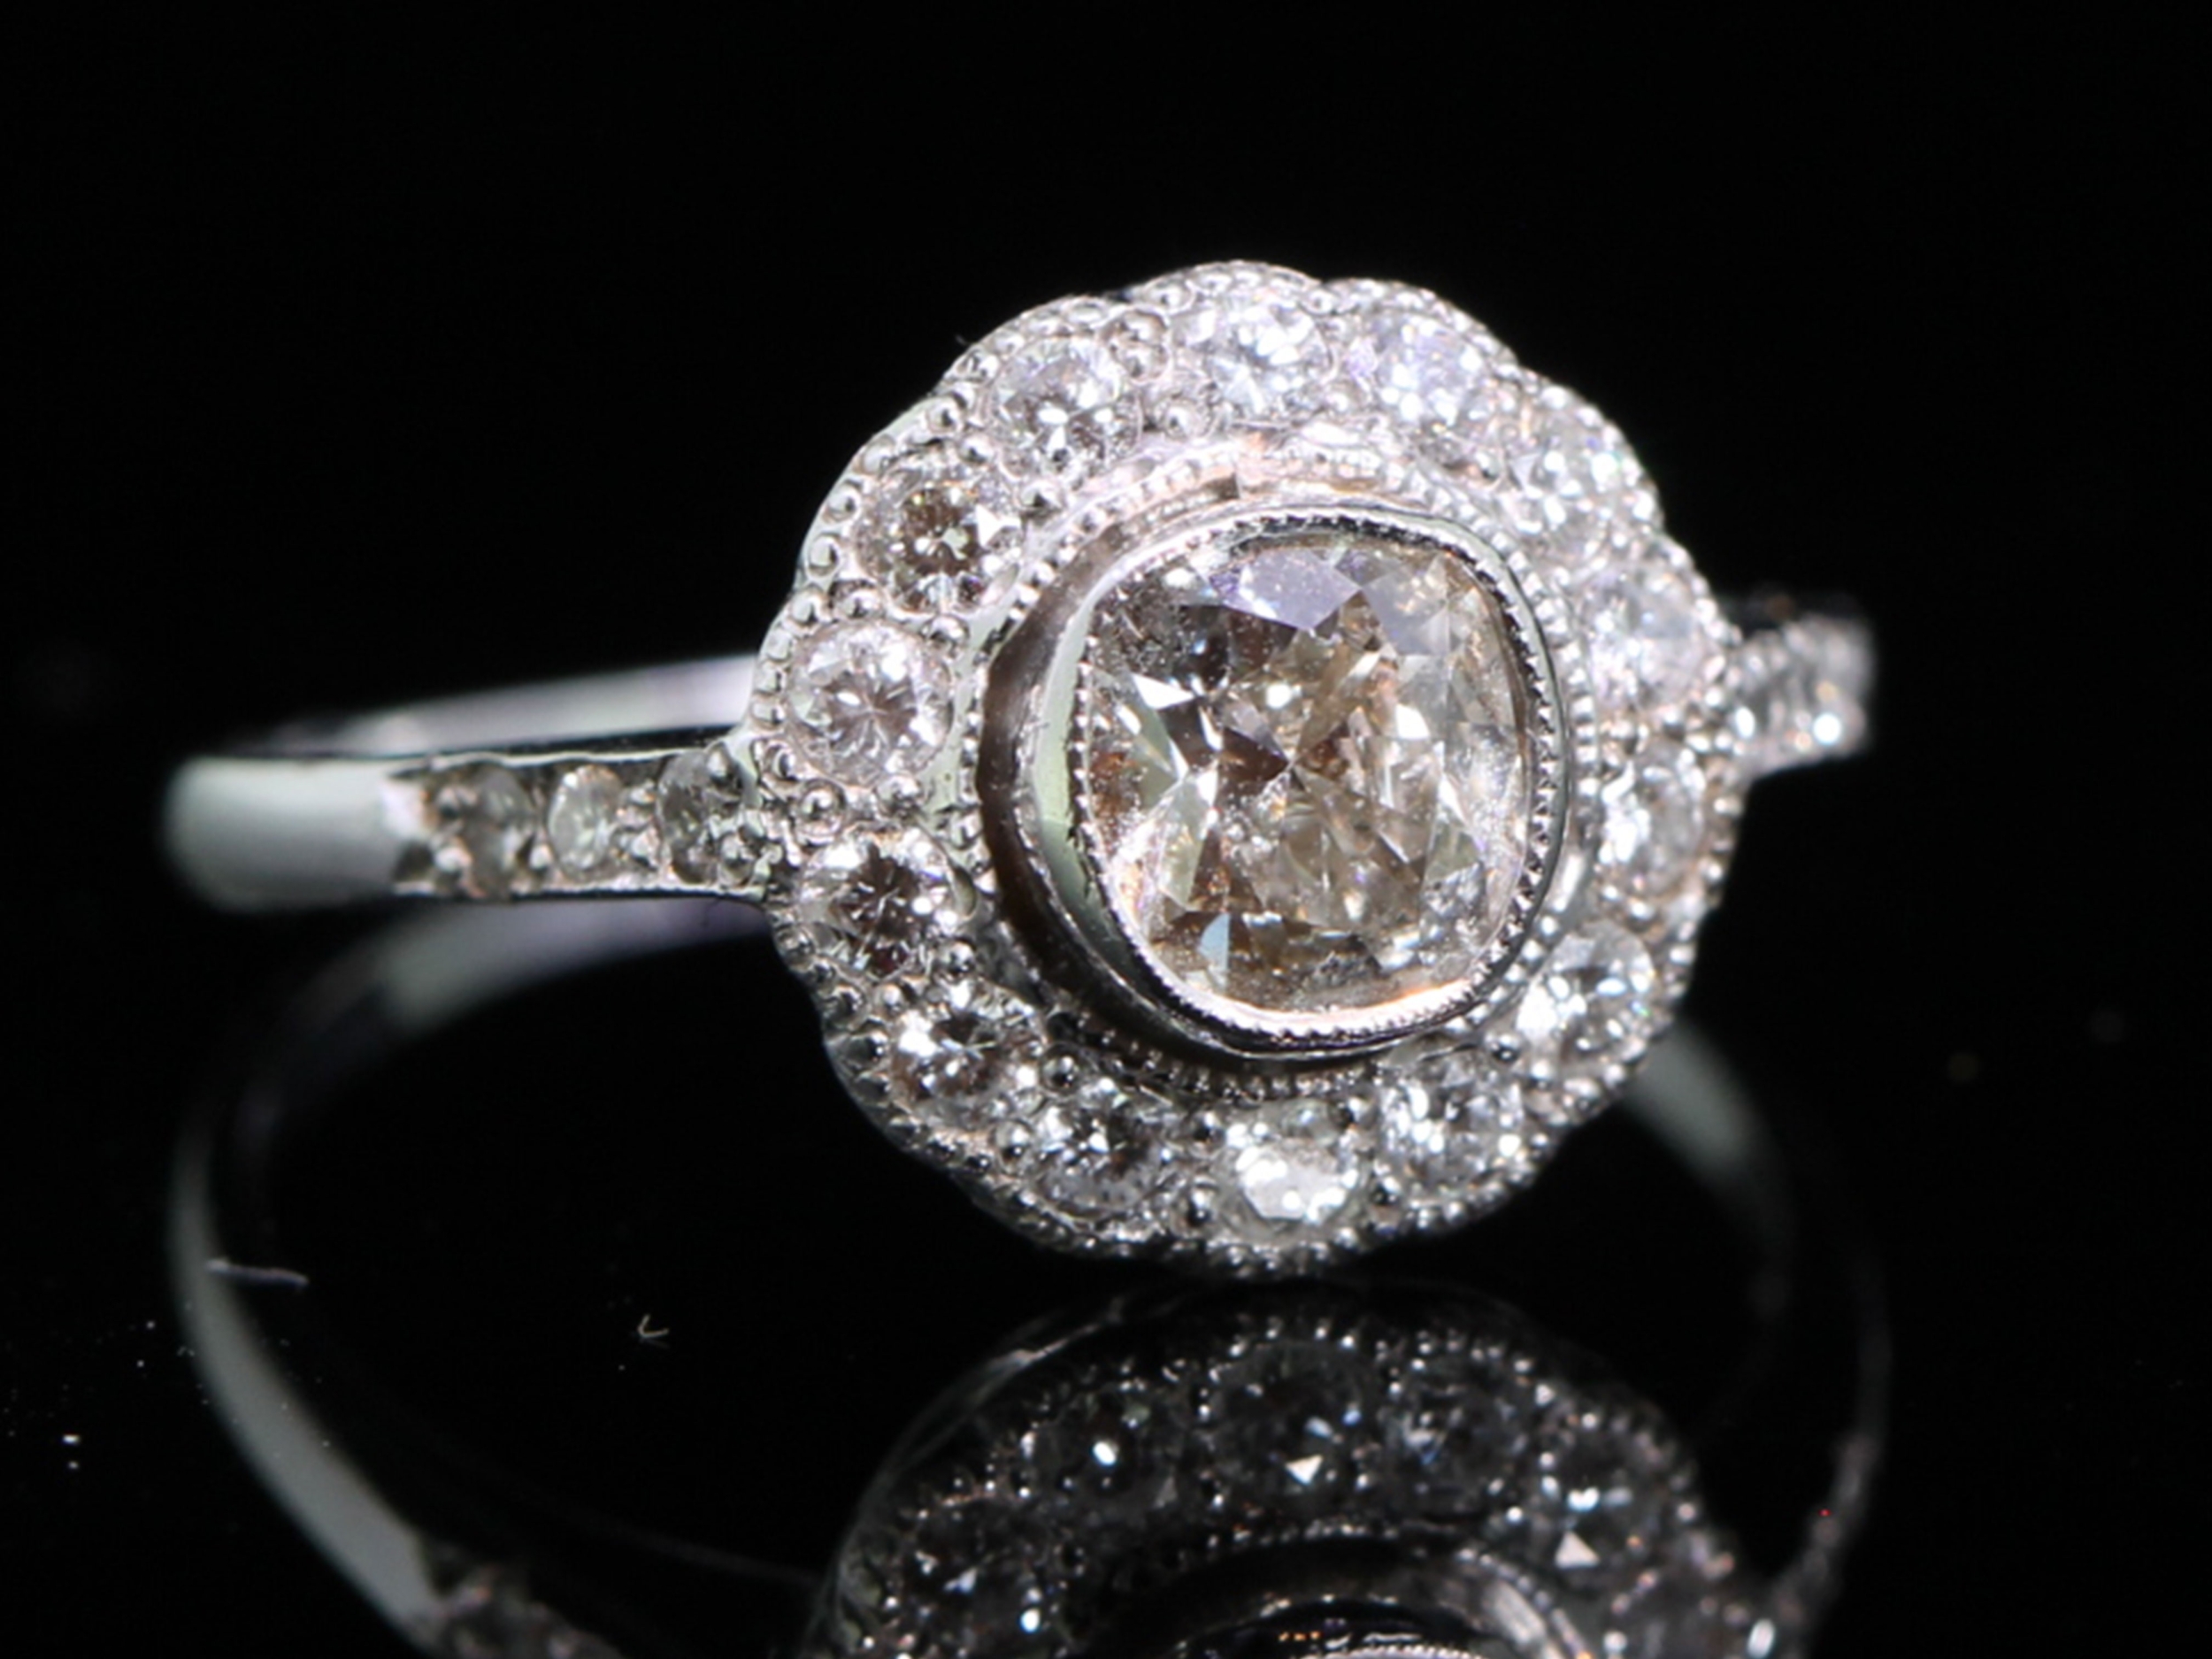  Breathtaking Vintage Inspired 18ct Gold Diamond Halo Ring